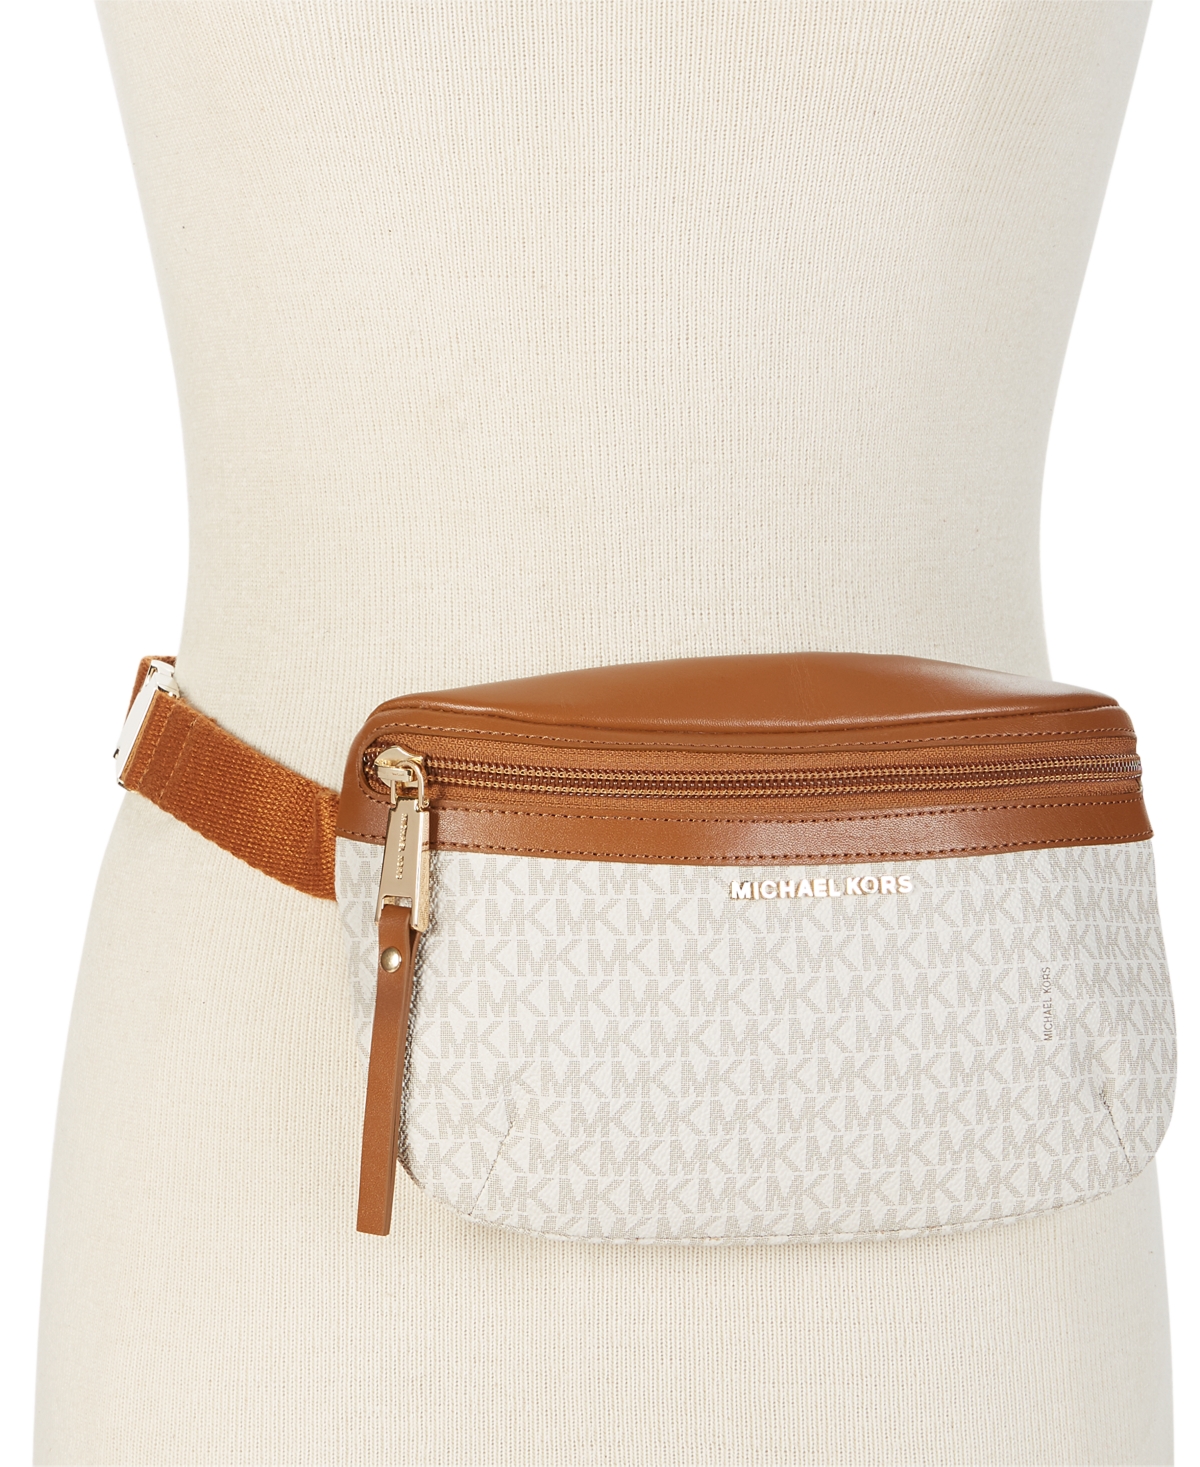 Michael Kors Signature Plus-Size Fanny Pack, Created for Macys & Reviews -  Belts - Handbags & Accessories - Macy's